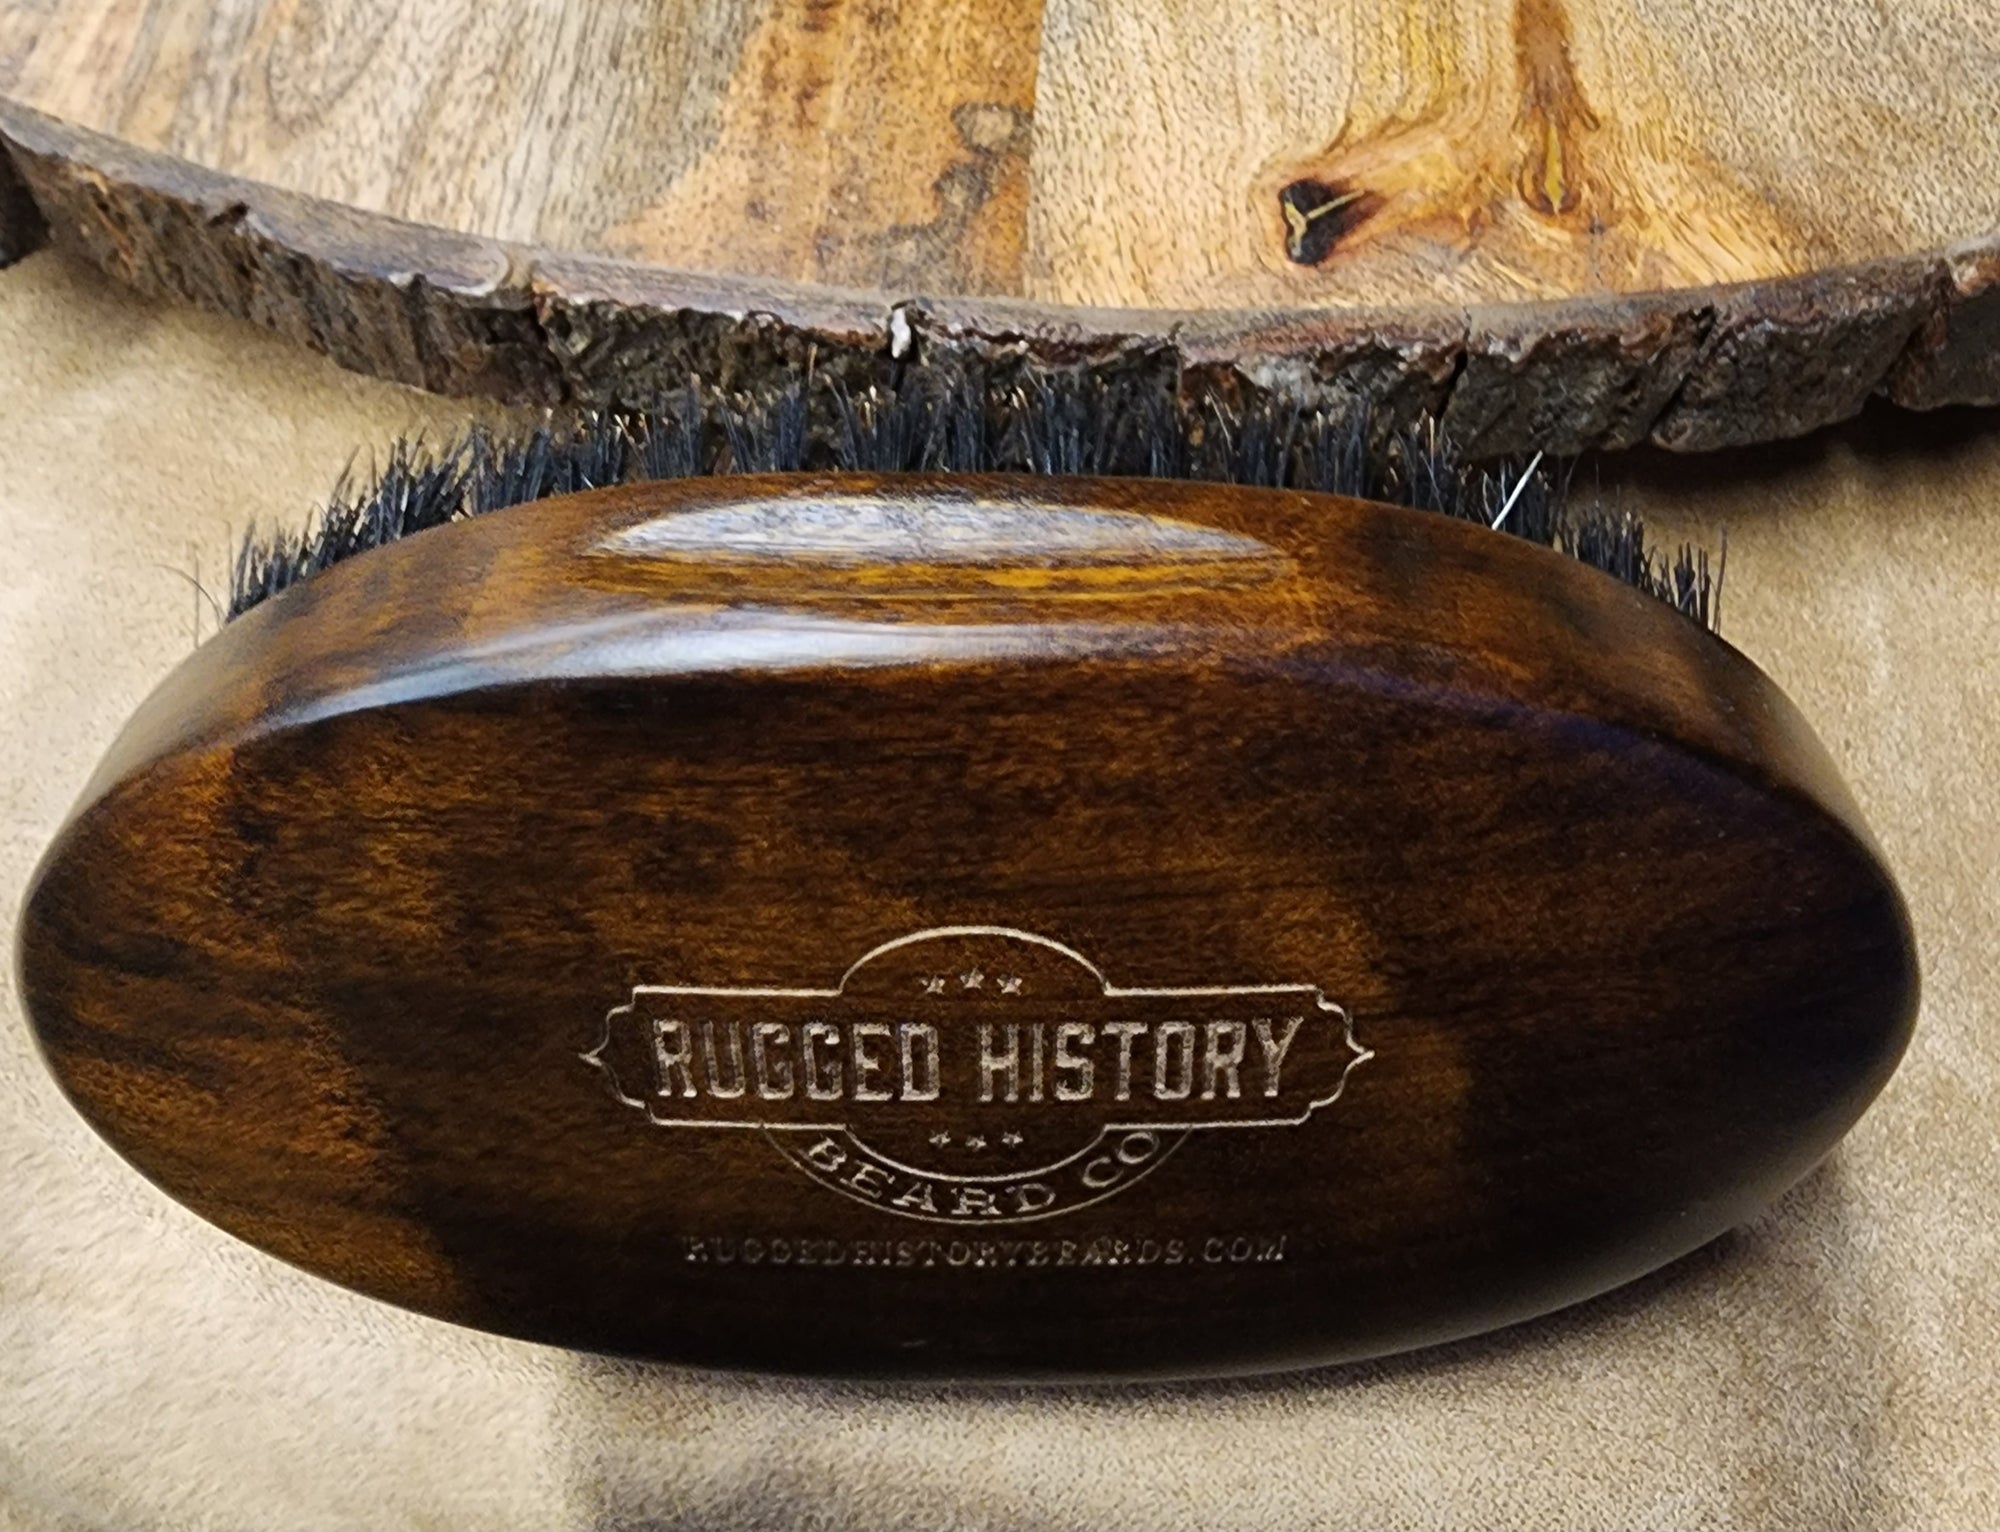 History combo Rugged - 3 item Beard